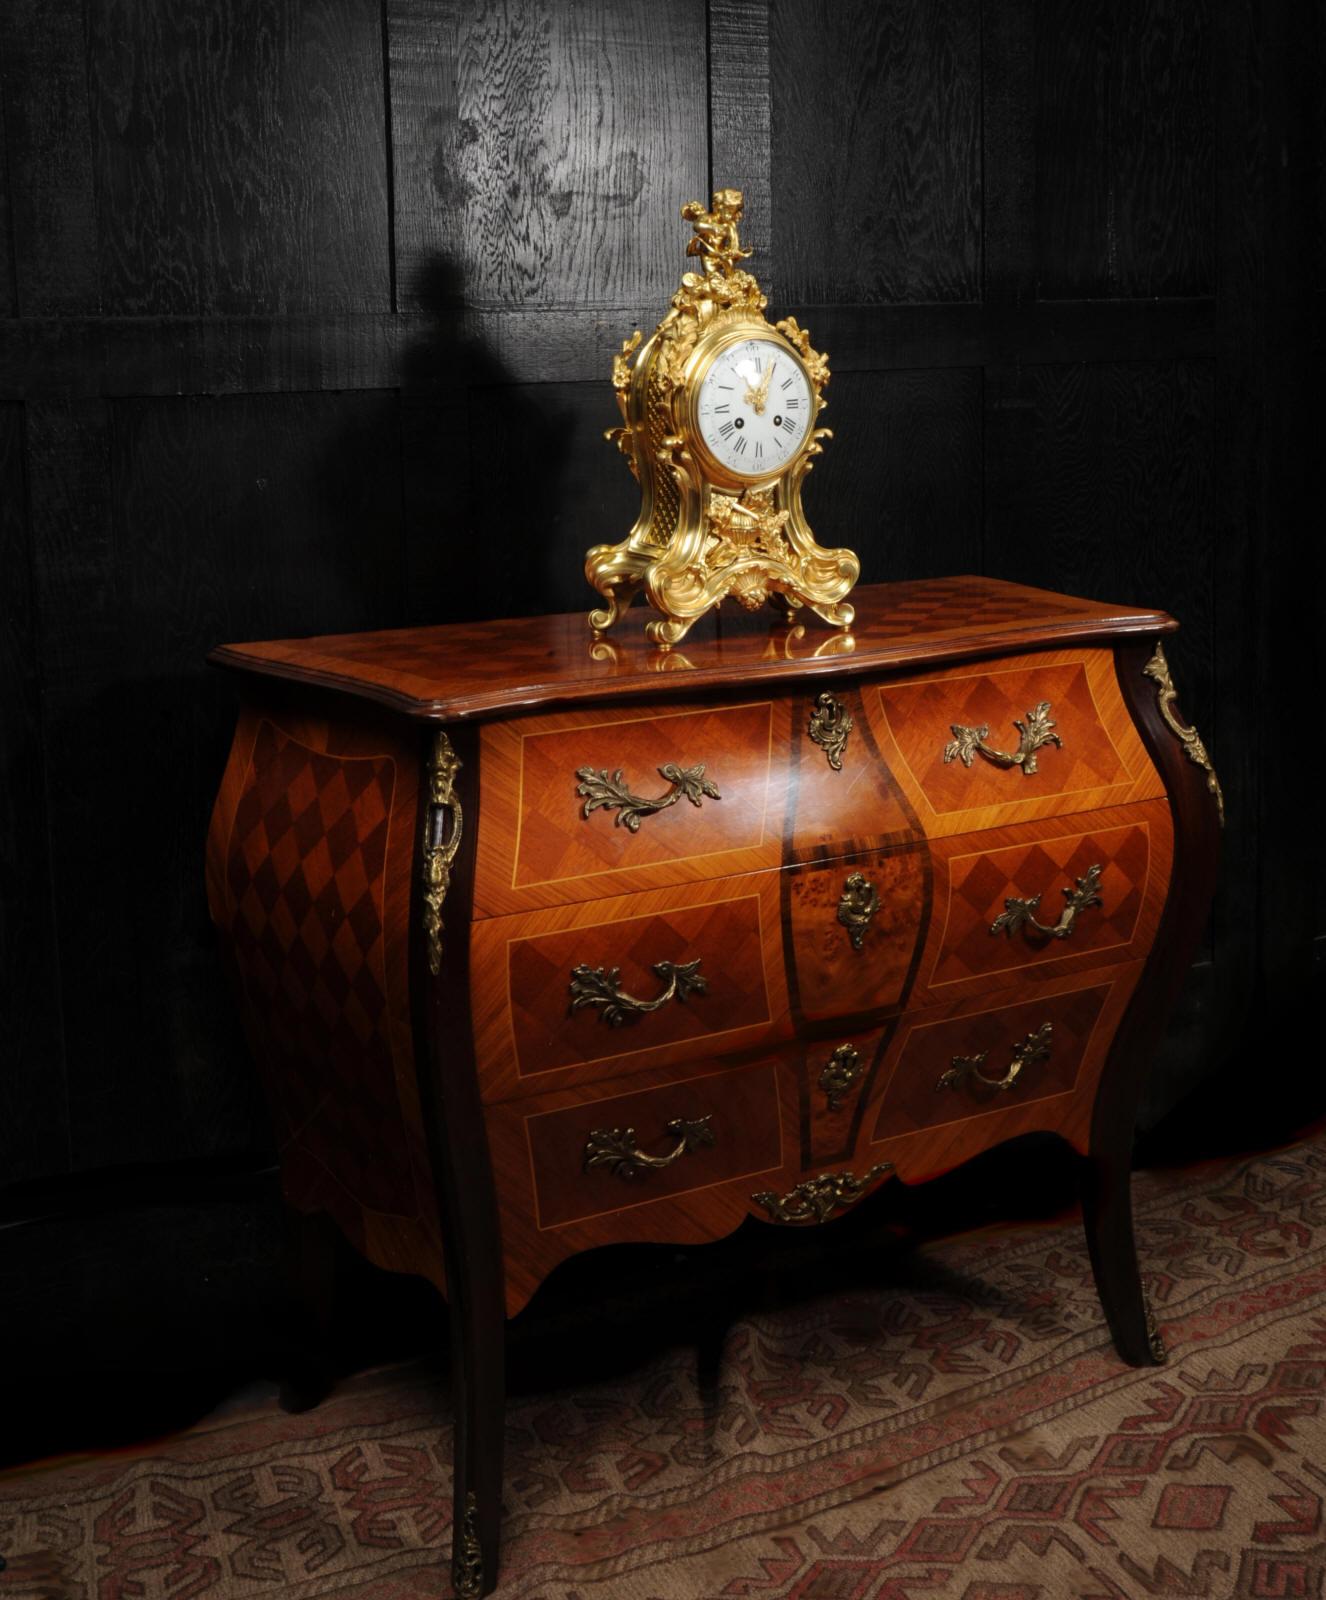 Belle horloge rococo française ancienne en bronze doré - Cupidon en vente 1